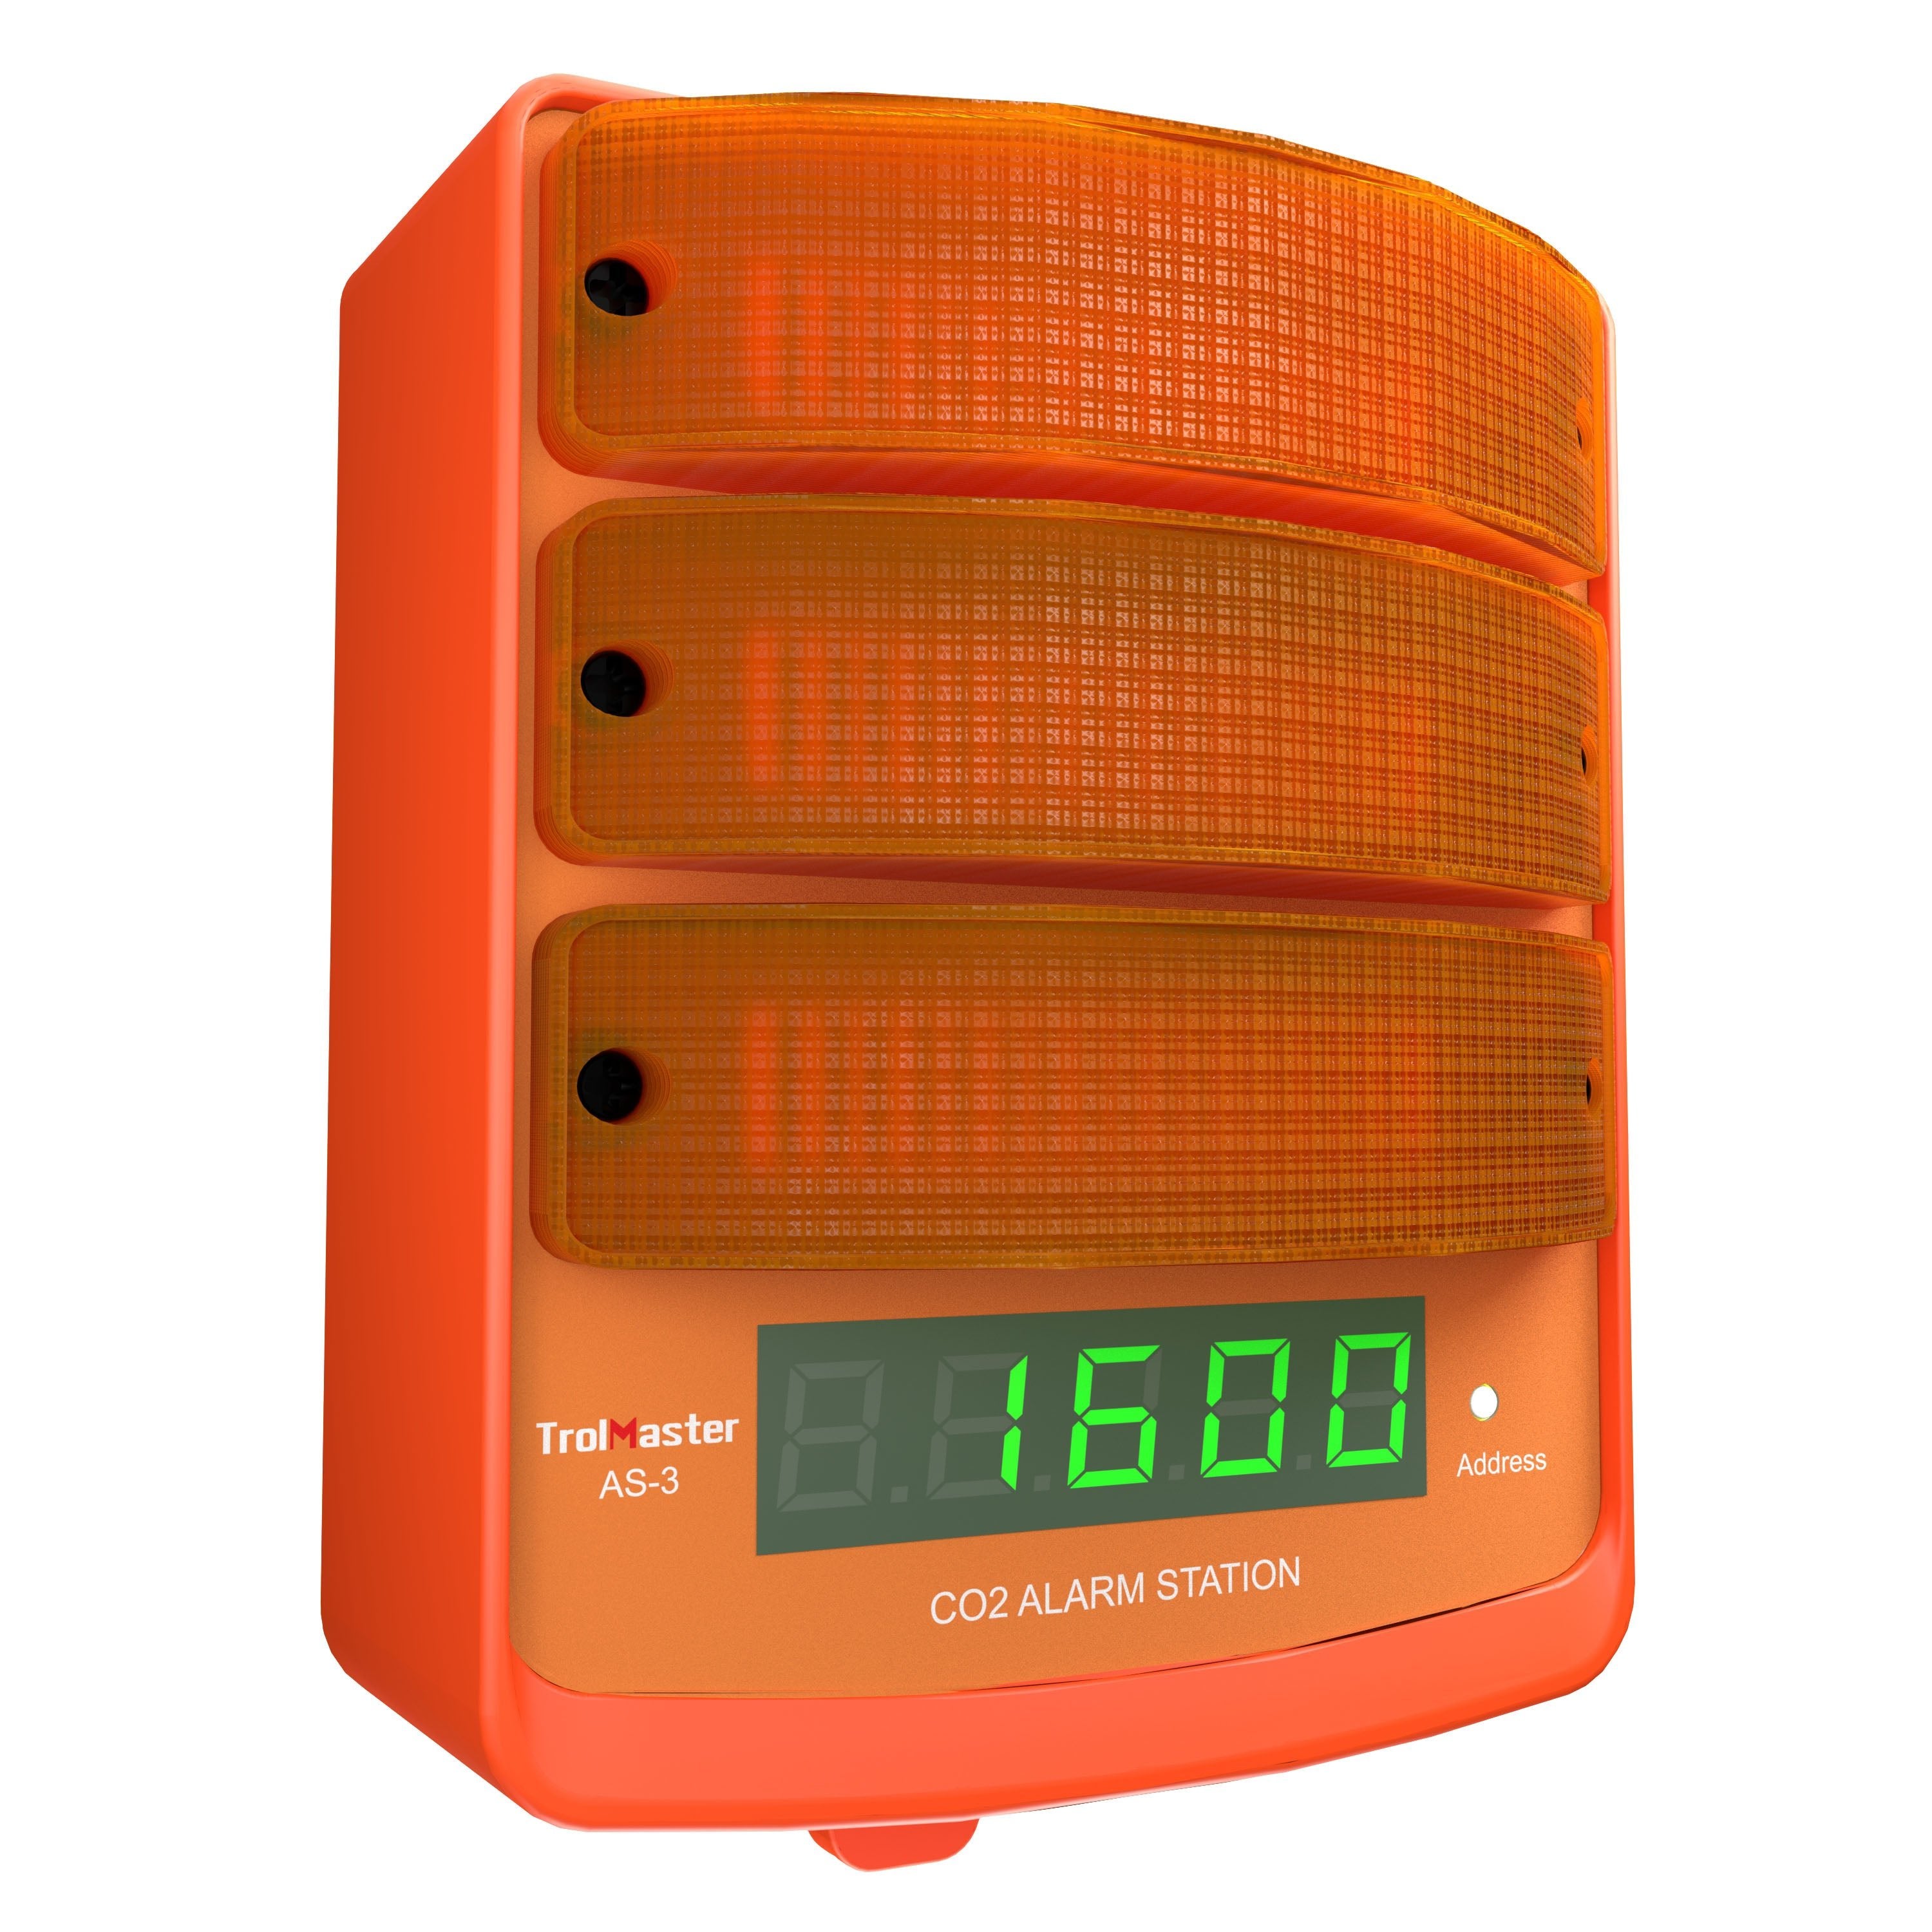 TrolMaster CO2 Alarm station - Green Thumb Depot